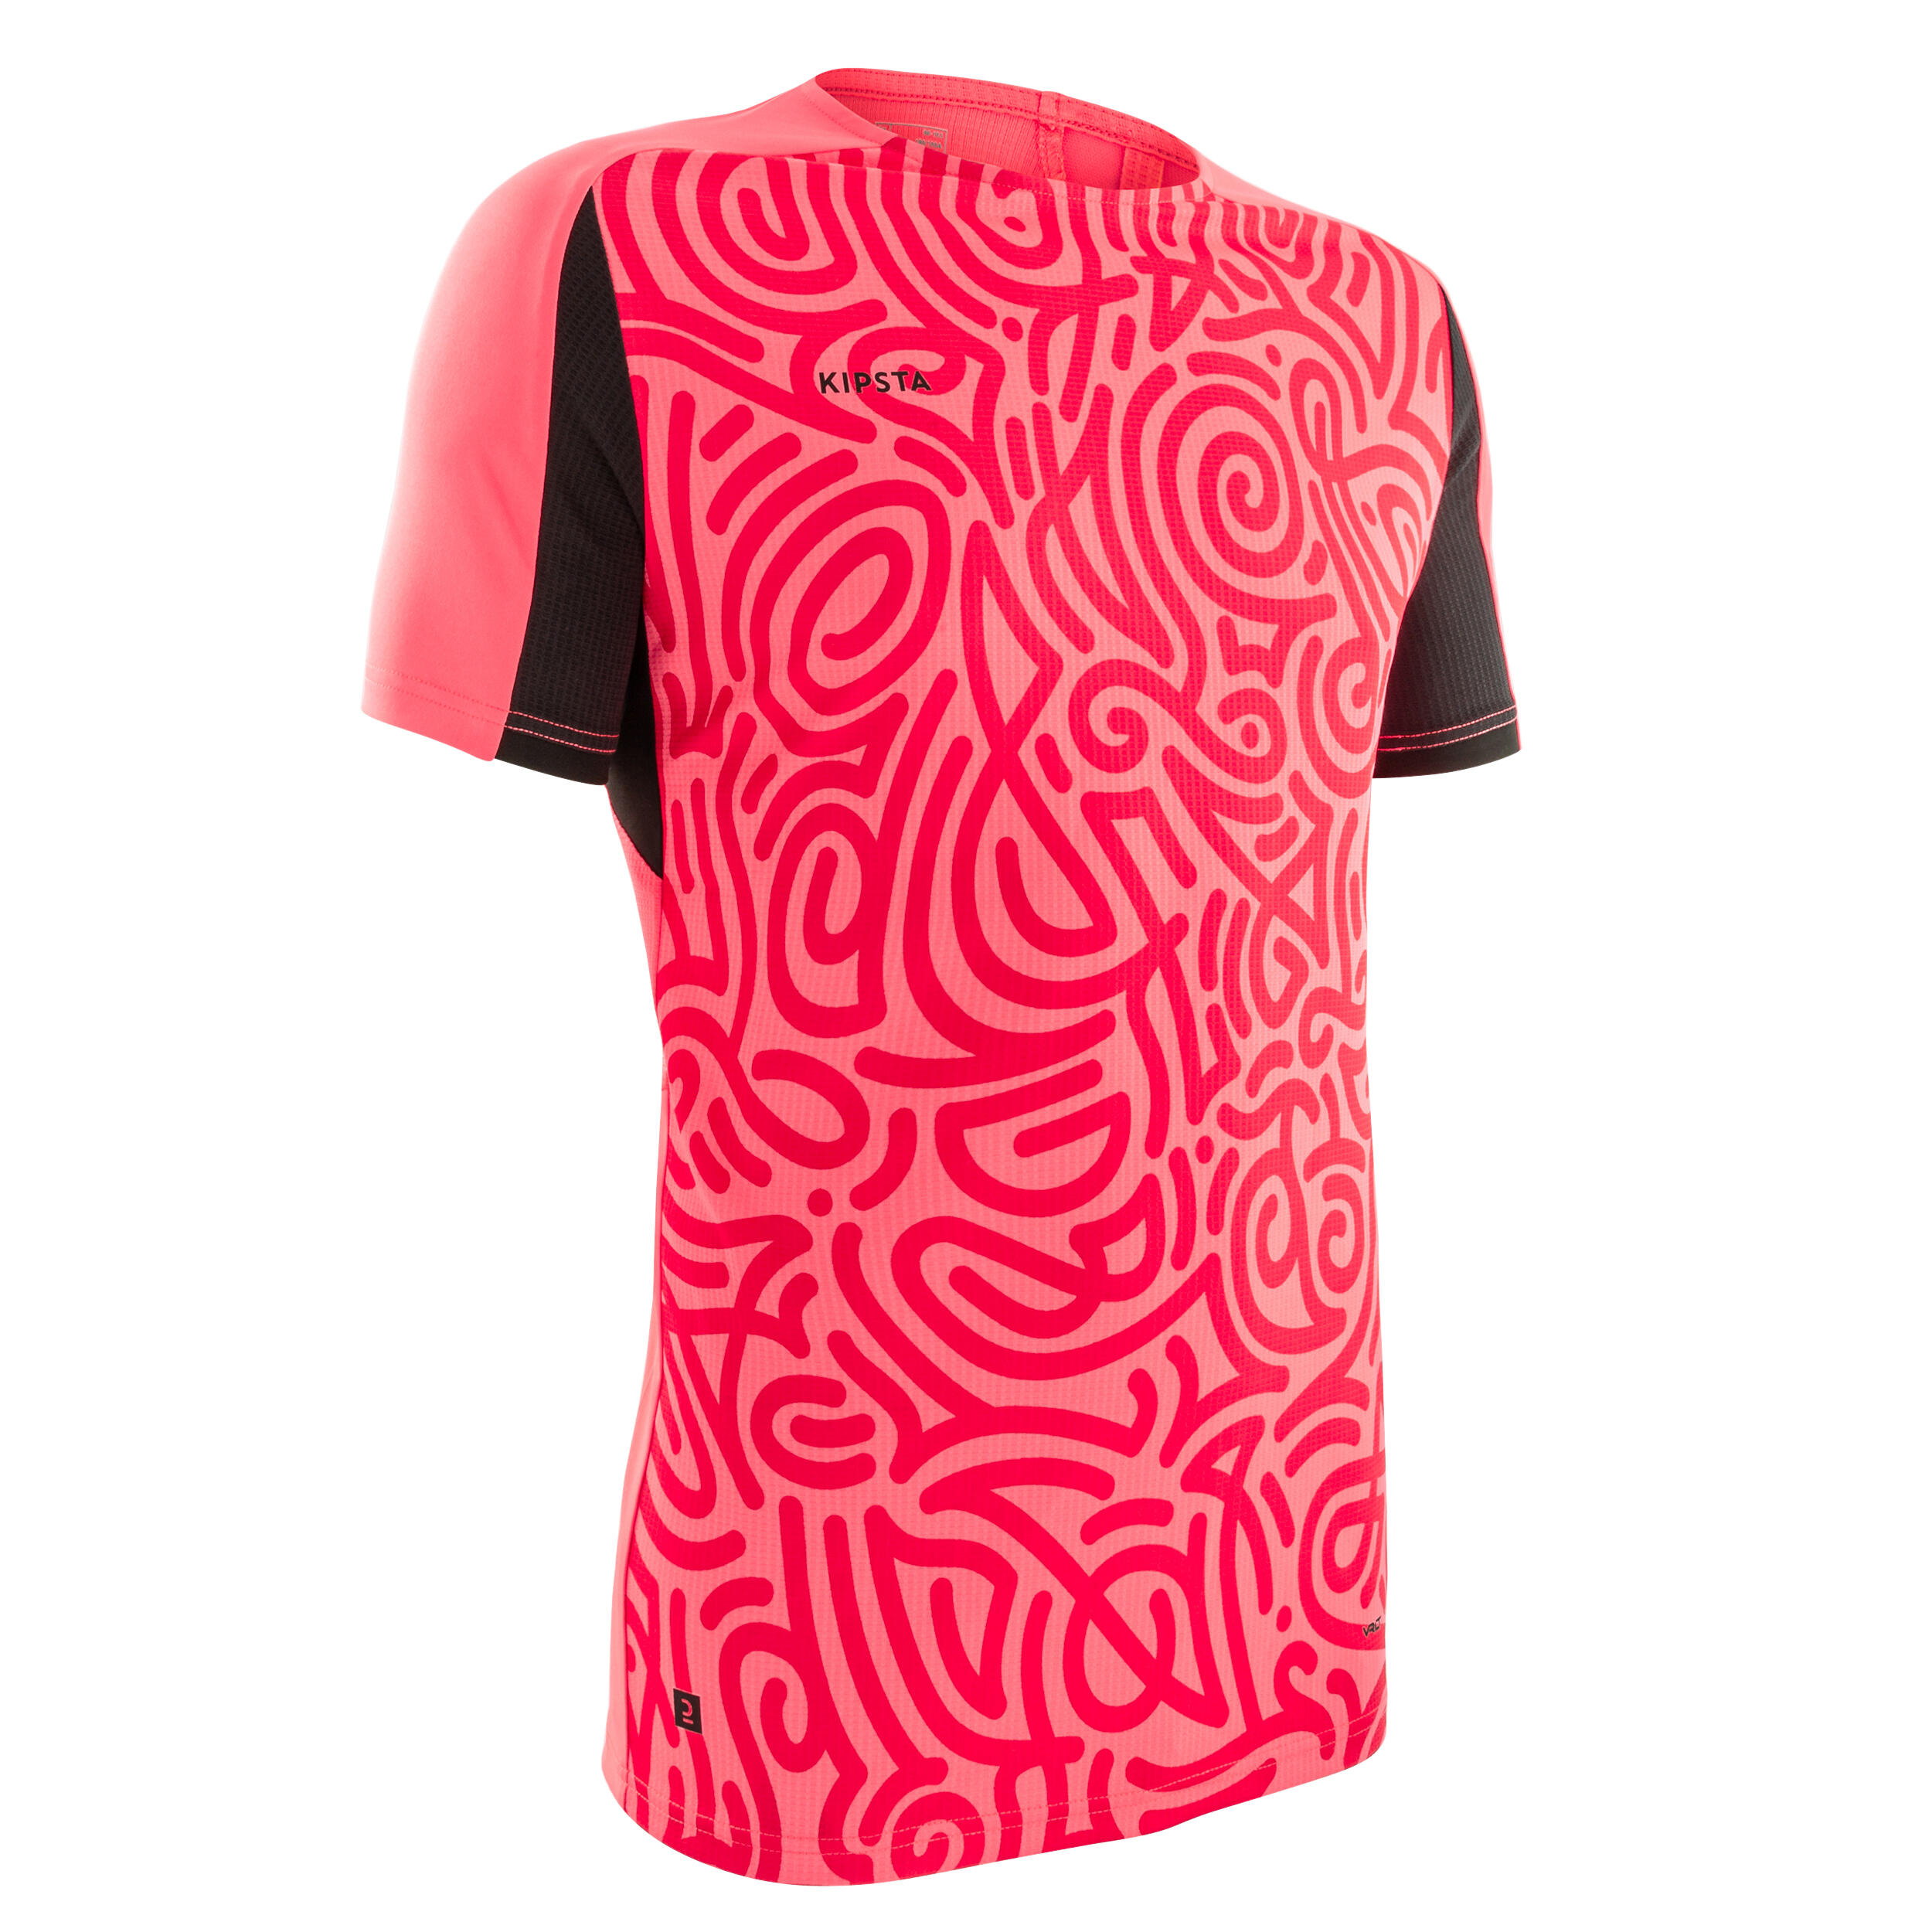 Men Football Jersey Shirt Viralto- Neon Pink - S By KIPSTA | Decathlon